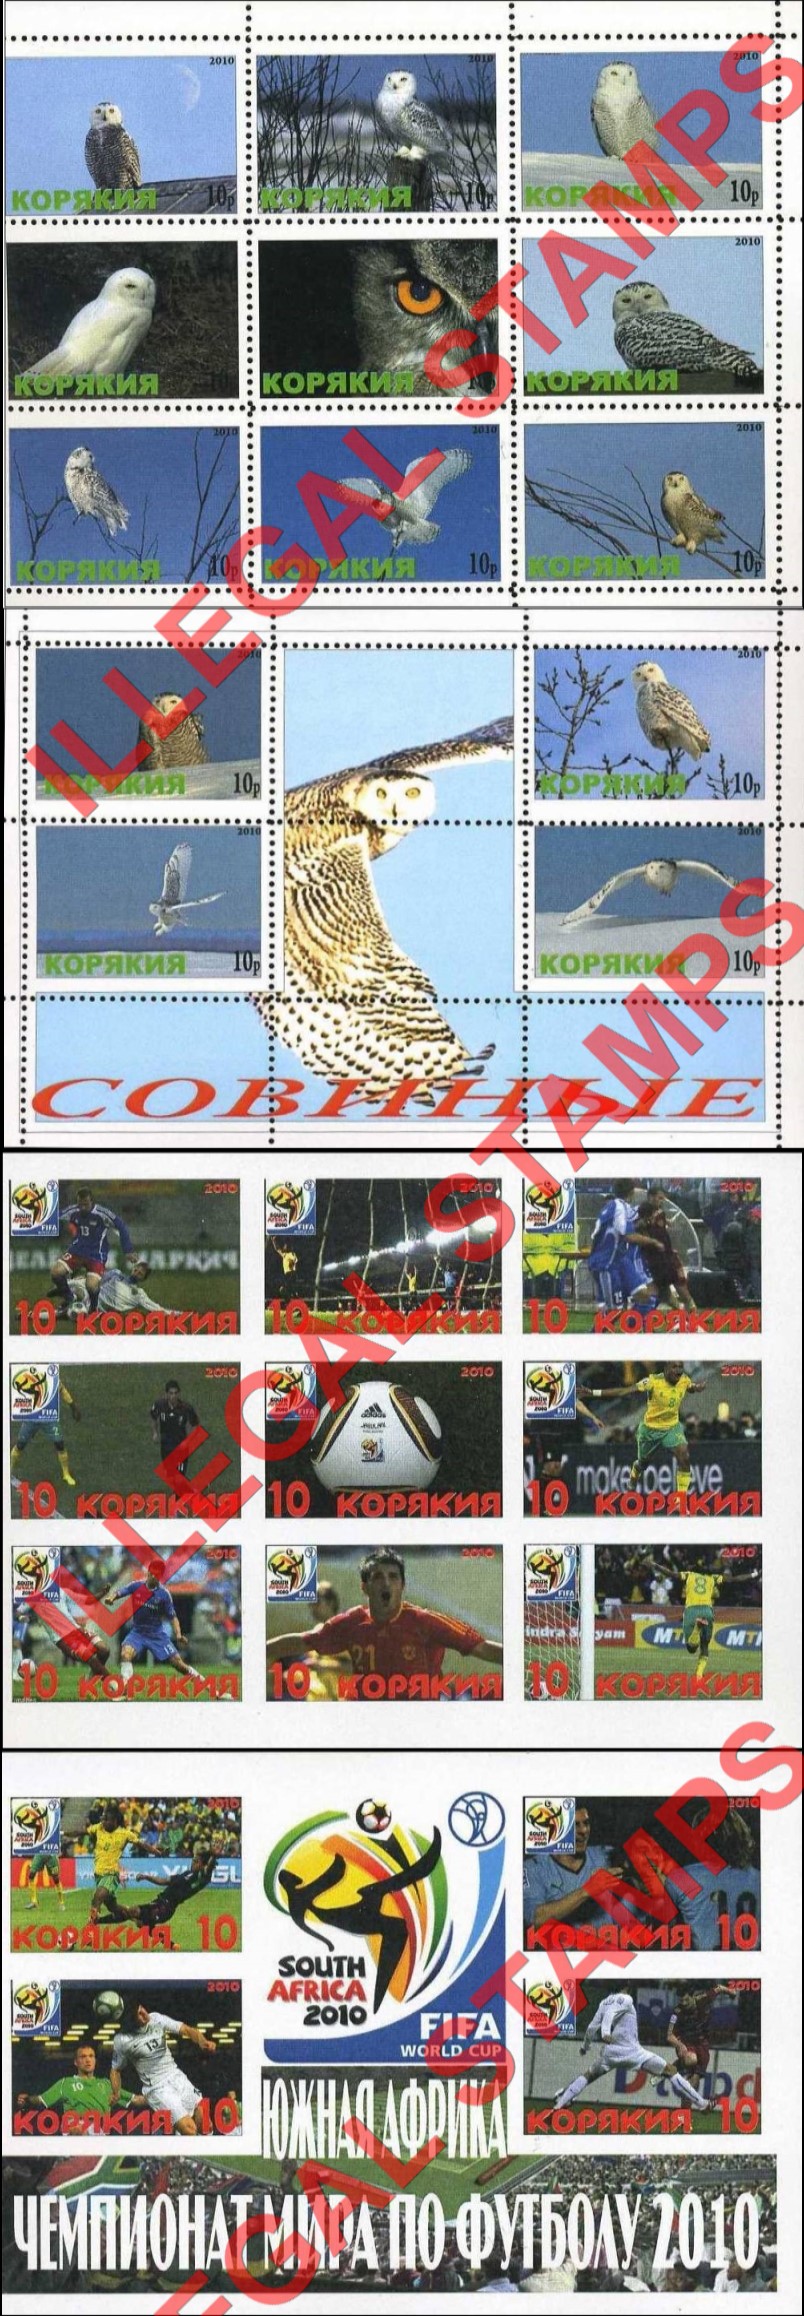 Autonomous Region of Koriakia 2010 Illegal Stamps